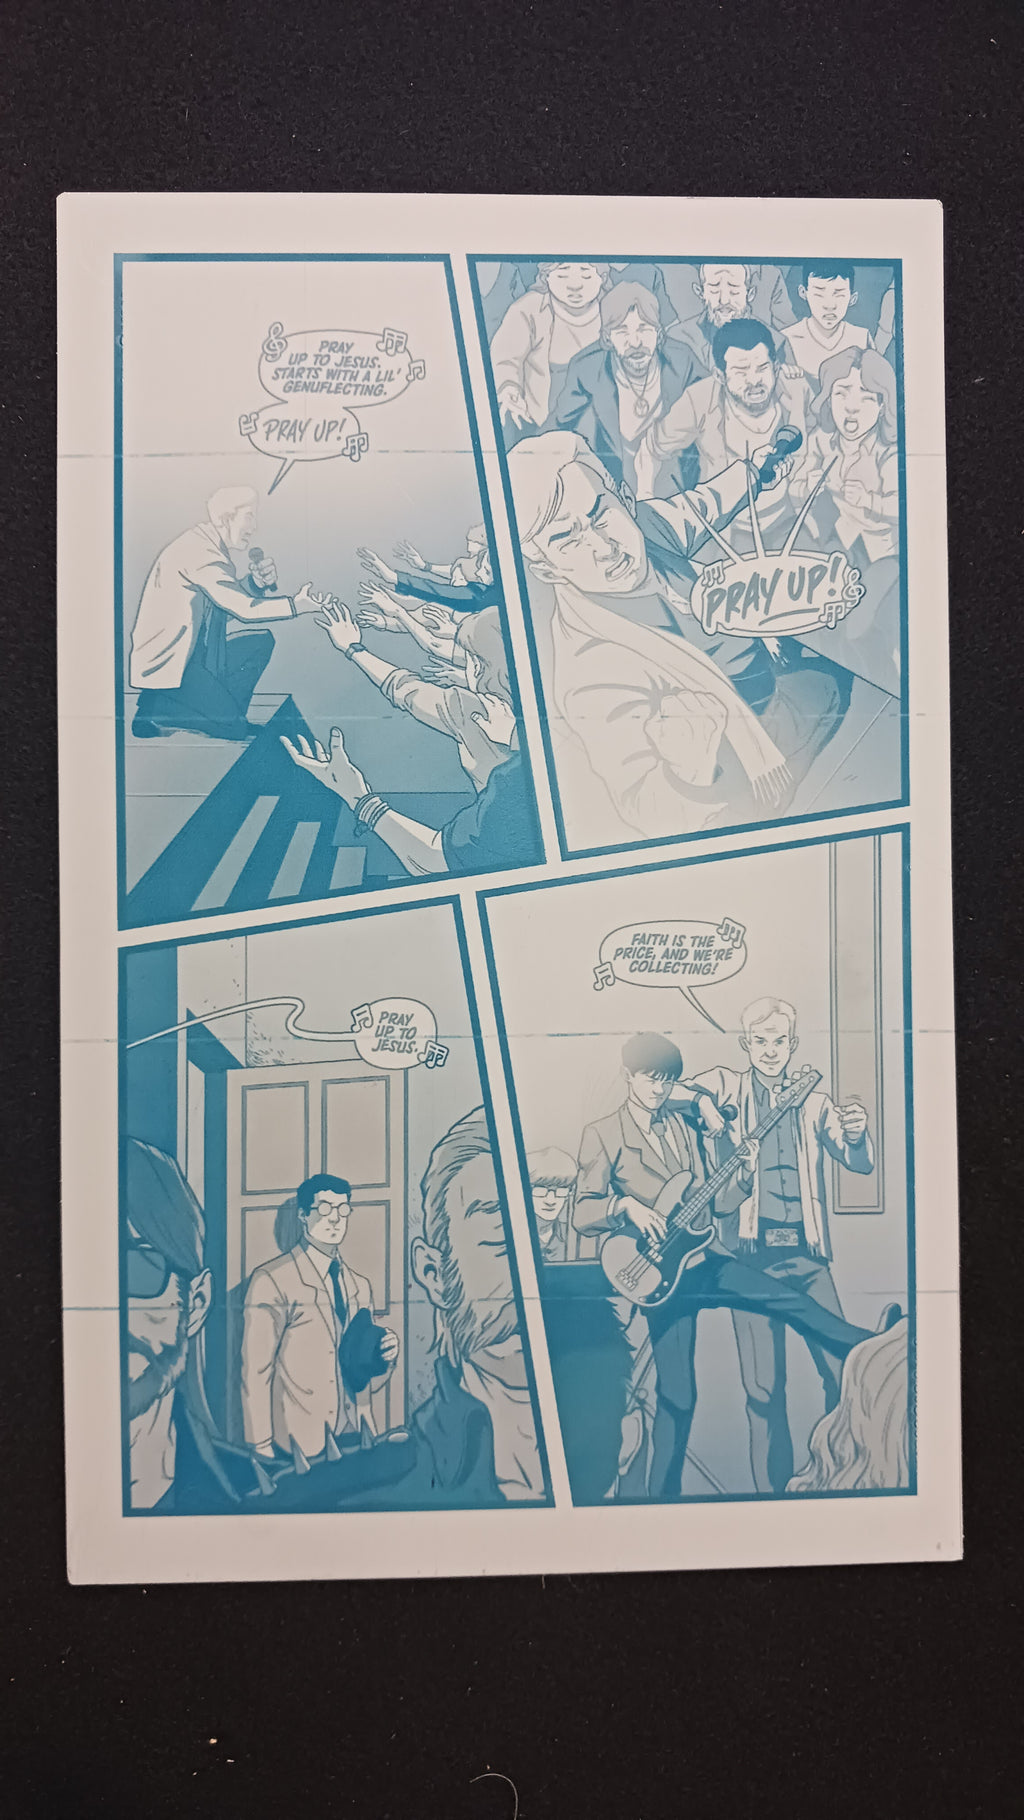 Miracle Kingdom #1 - Page 10 - PRESSWORKS - Comic Art - Printer Plate - Cyan